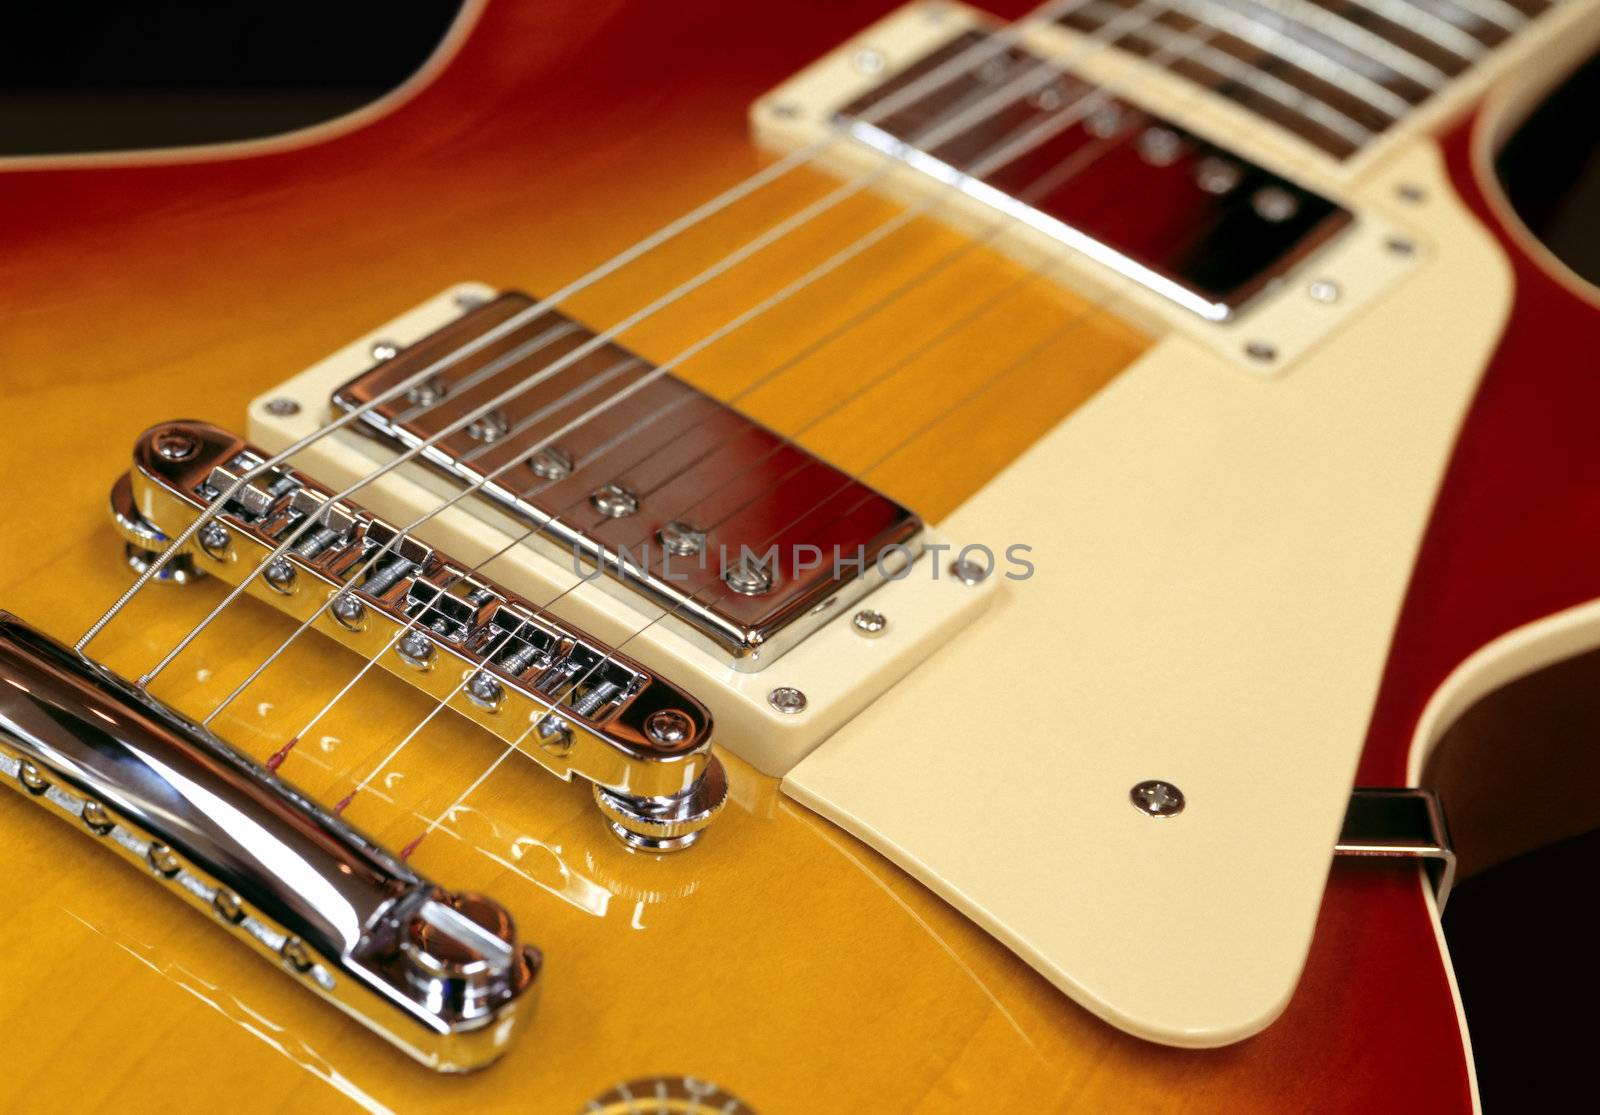 Closeup of the pickups on an electric guitar.
